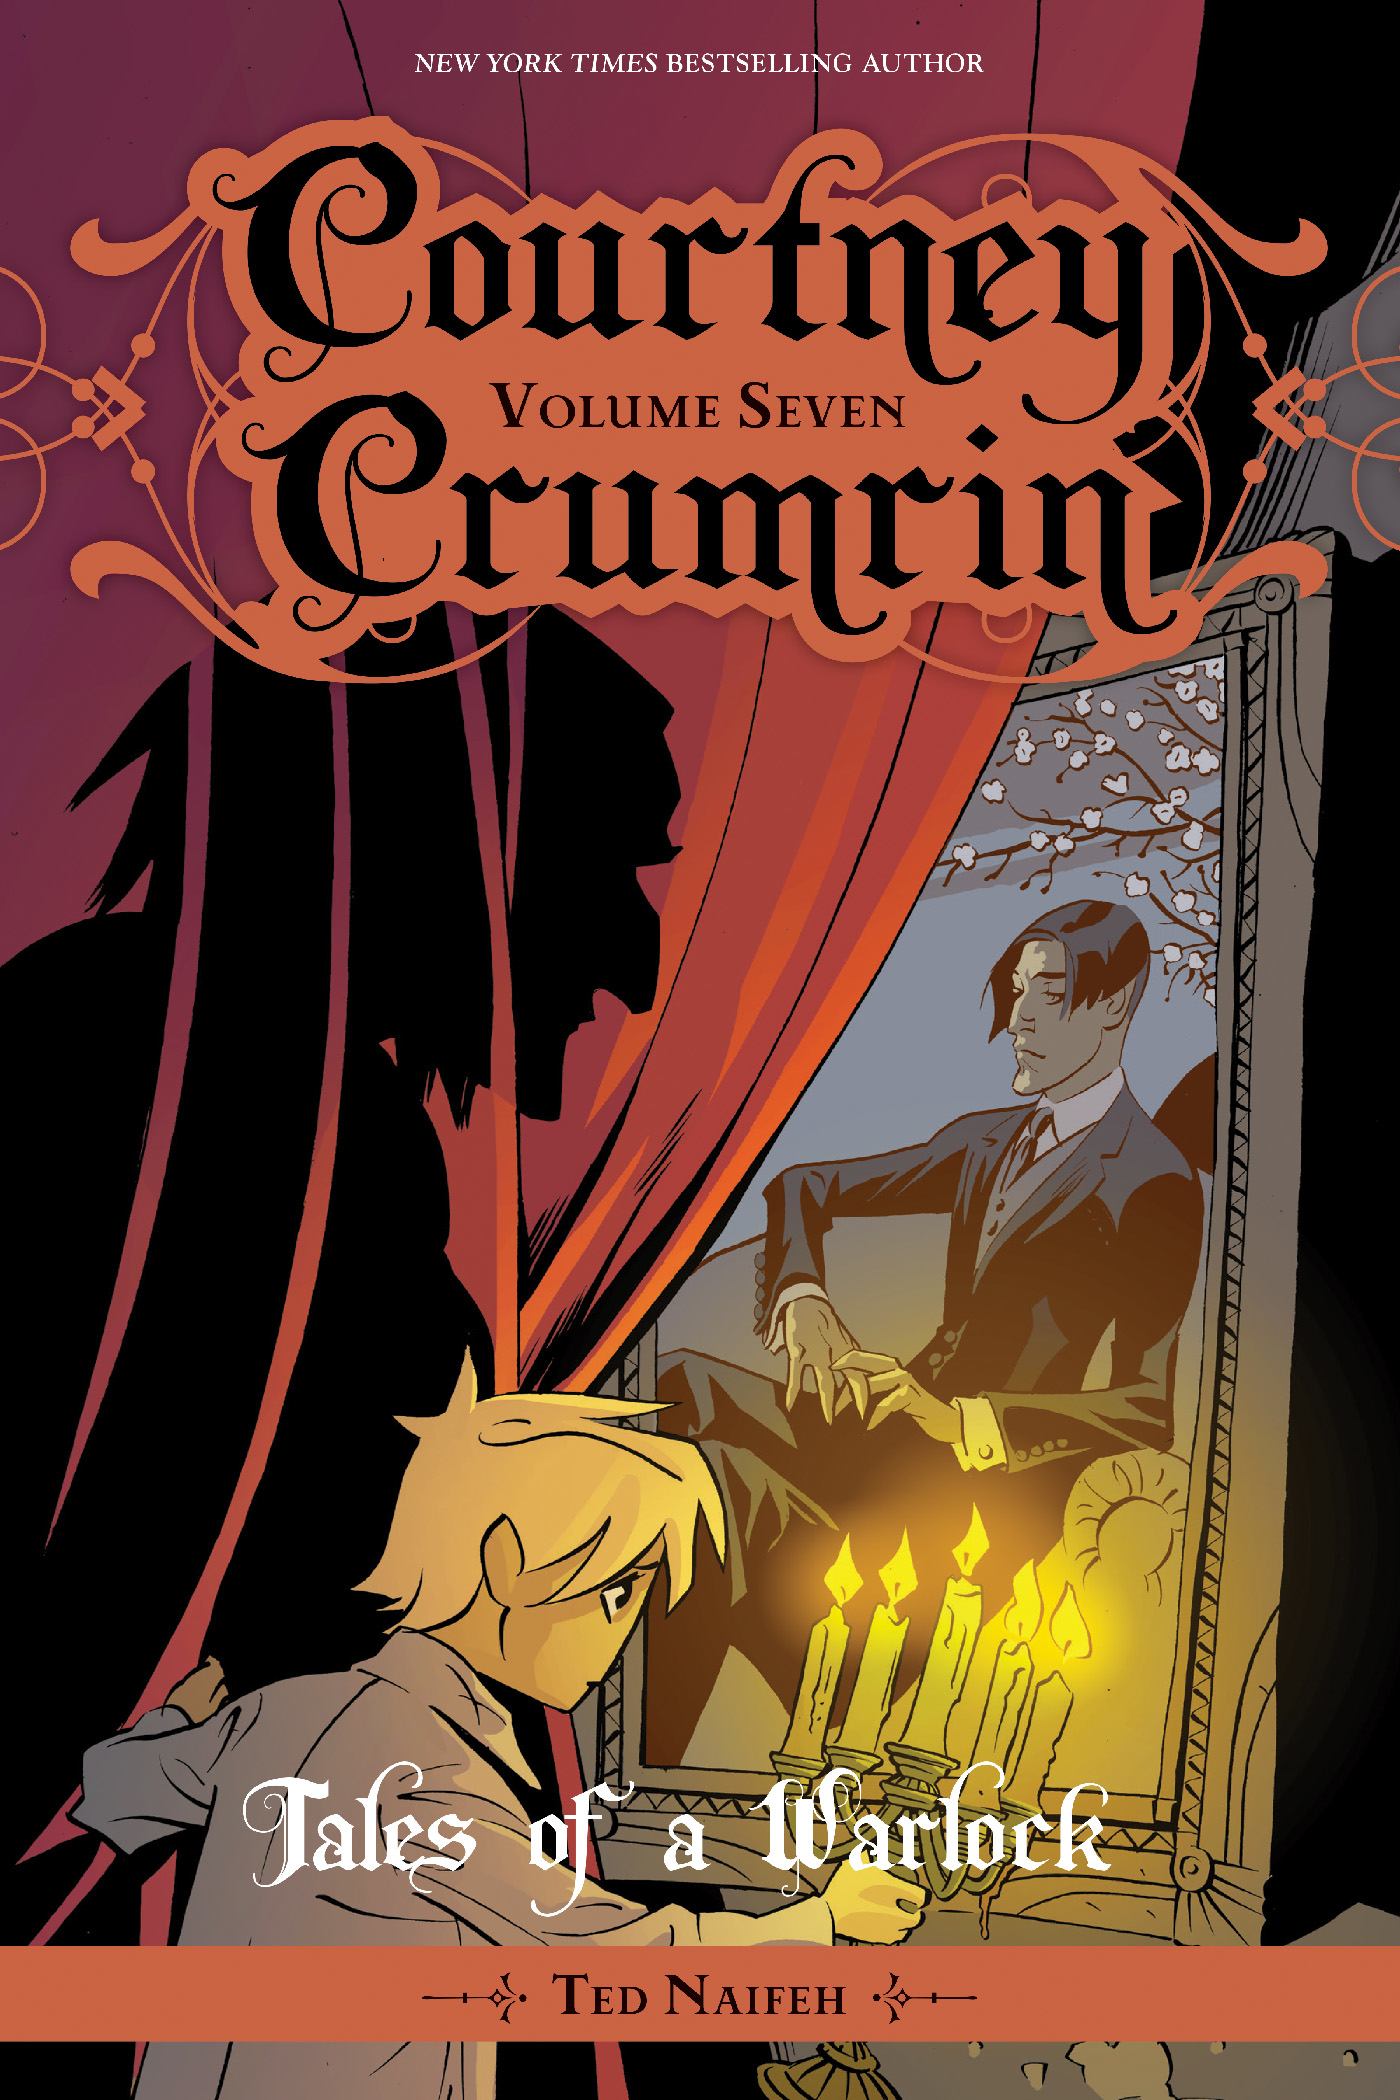 Courtney Crumrin Graphic Novel Volume 7